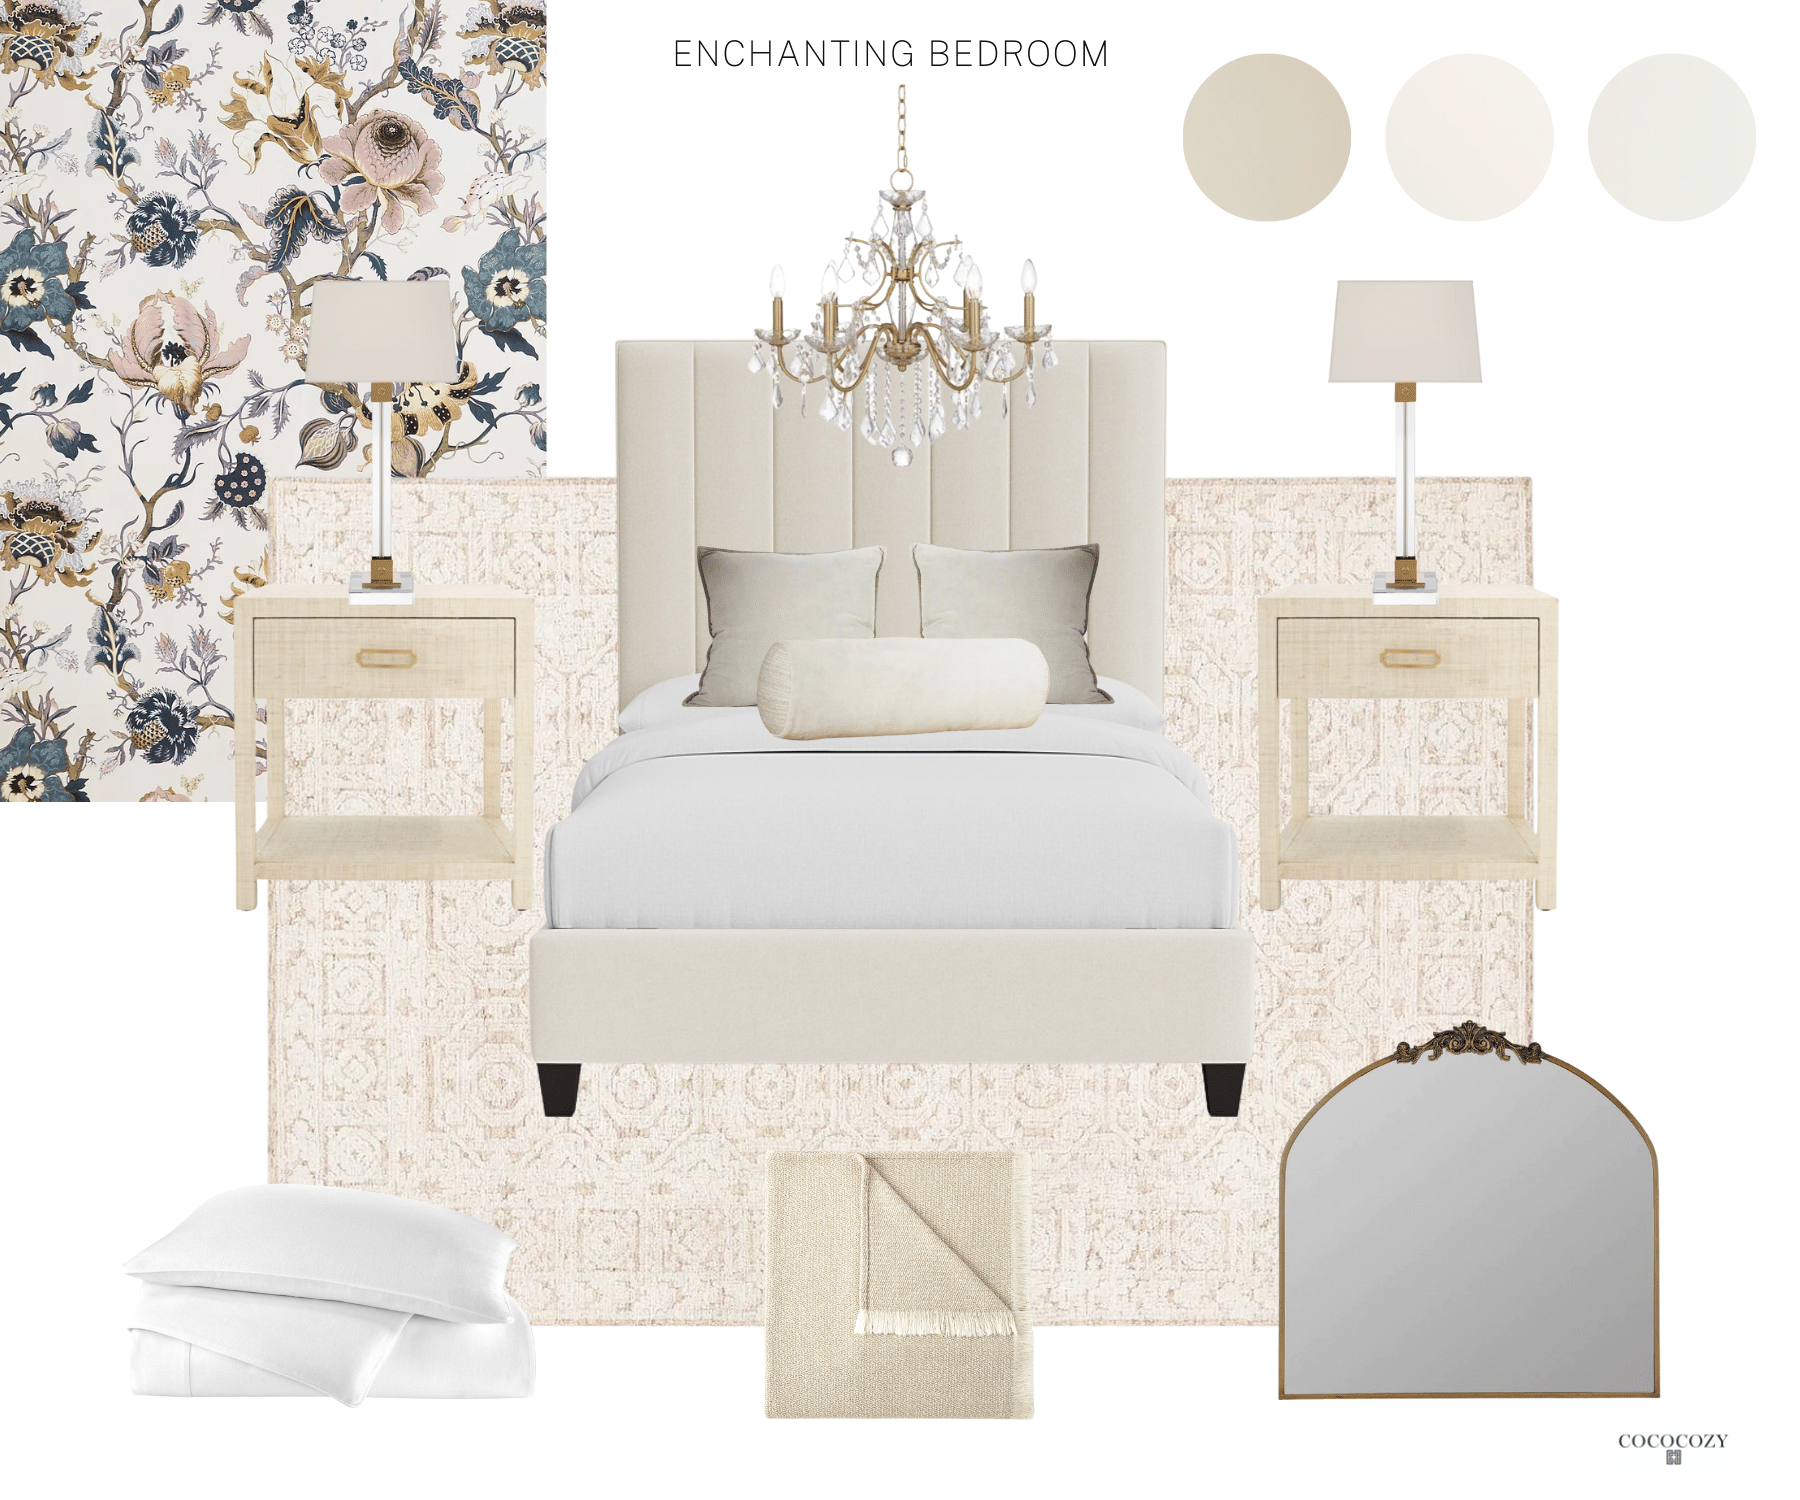 Alt tag for enchanted-bedroom-design-king-headboard-chandelier-neutral-room-cococozy